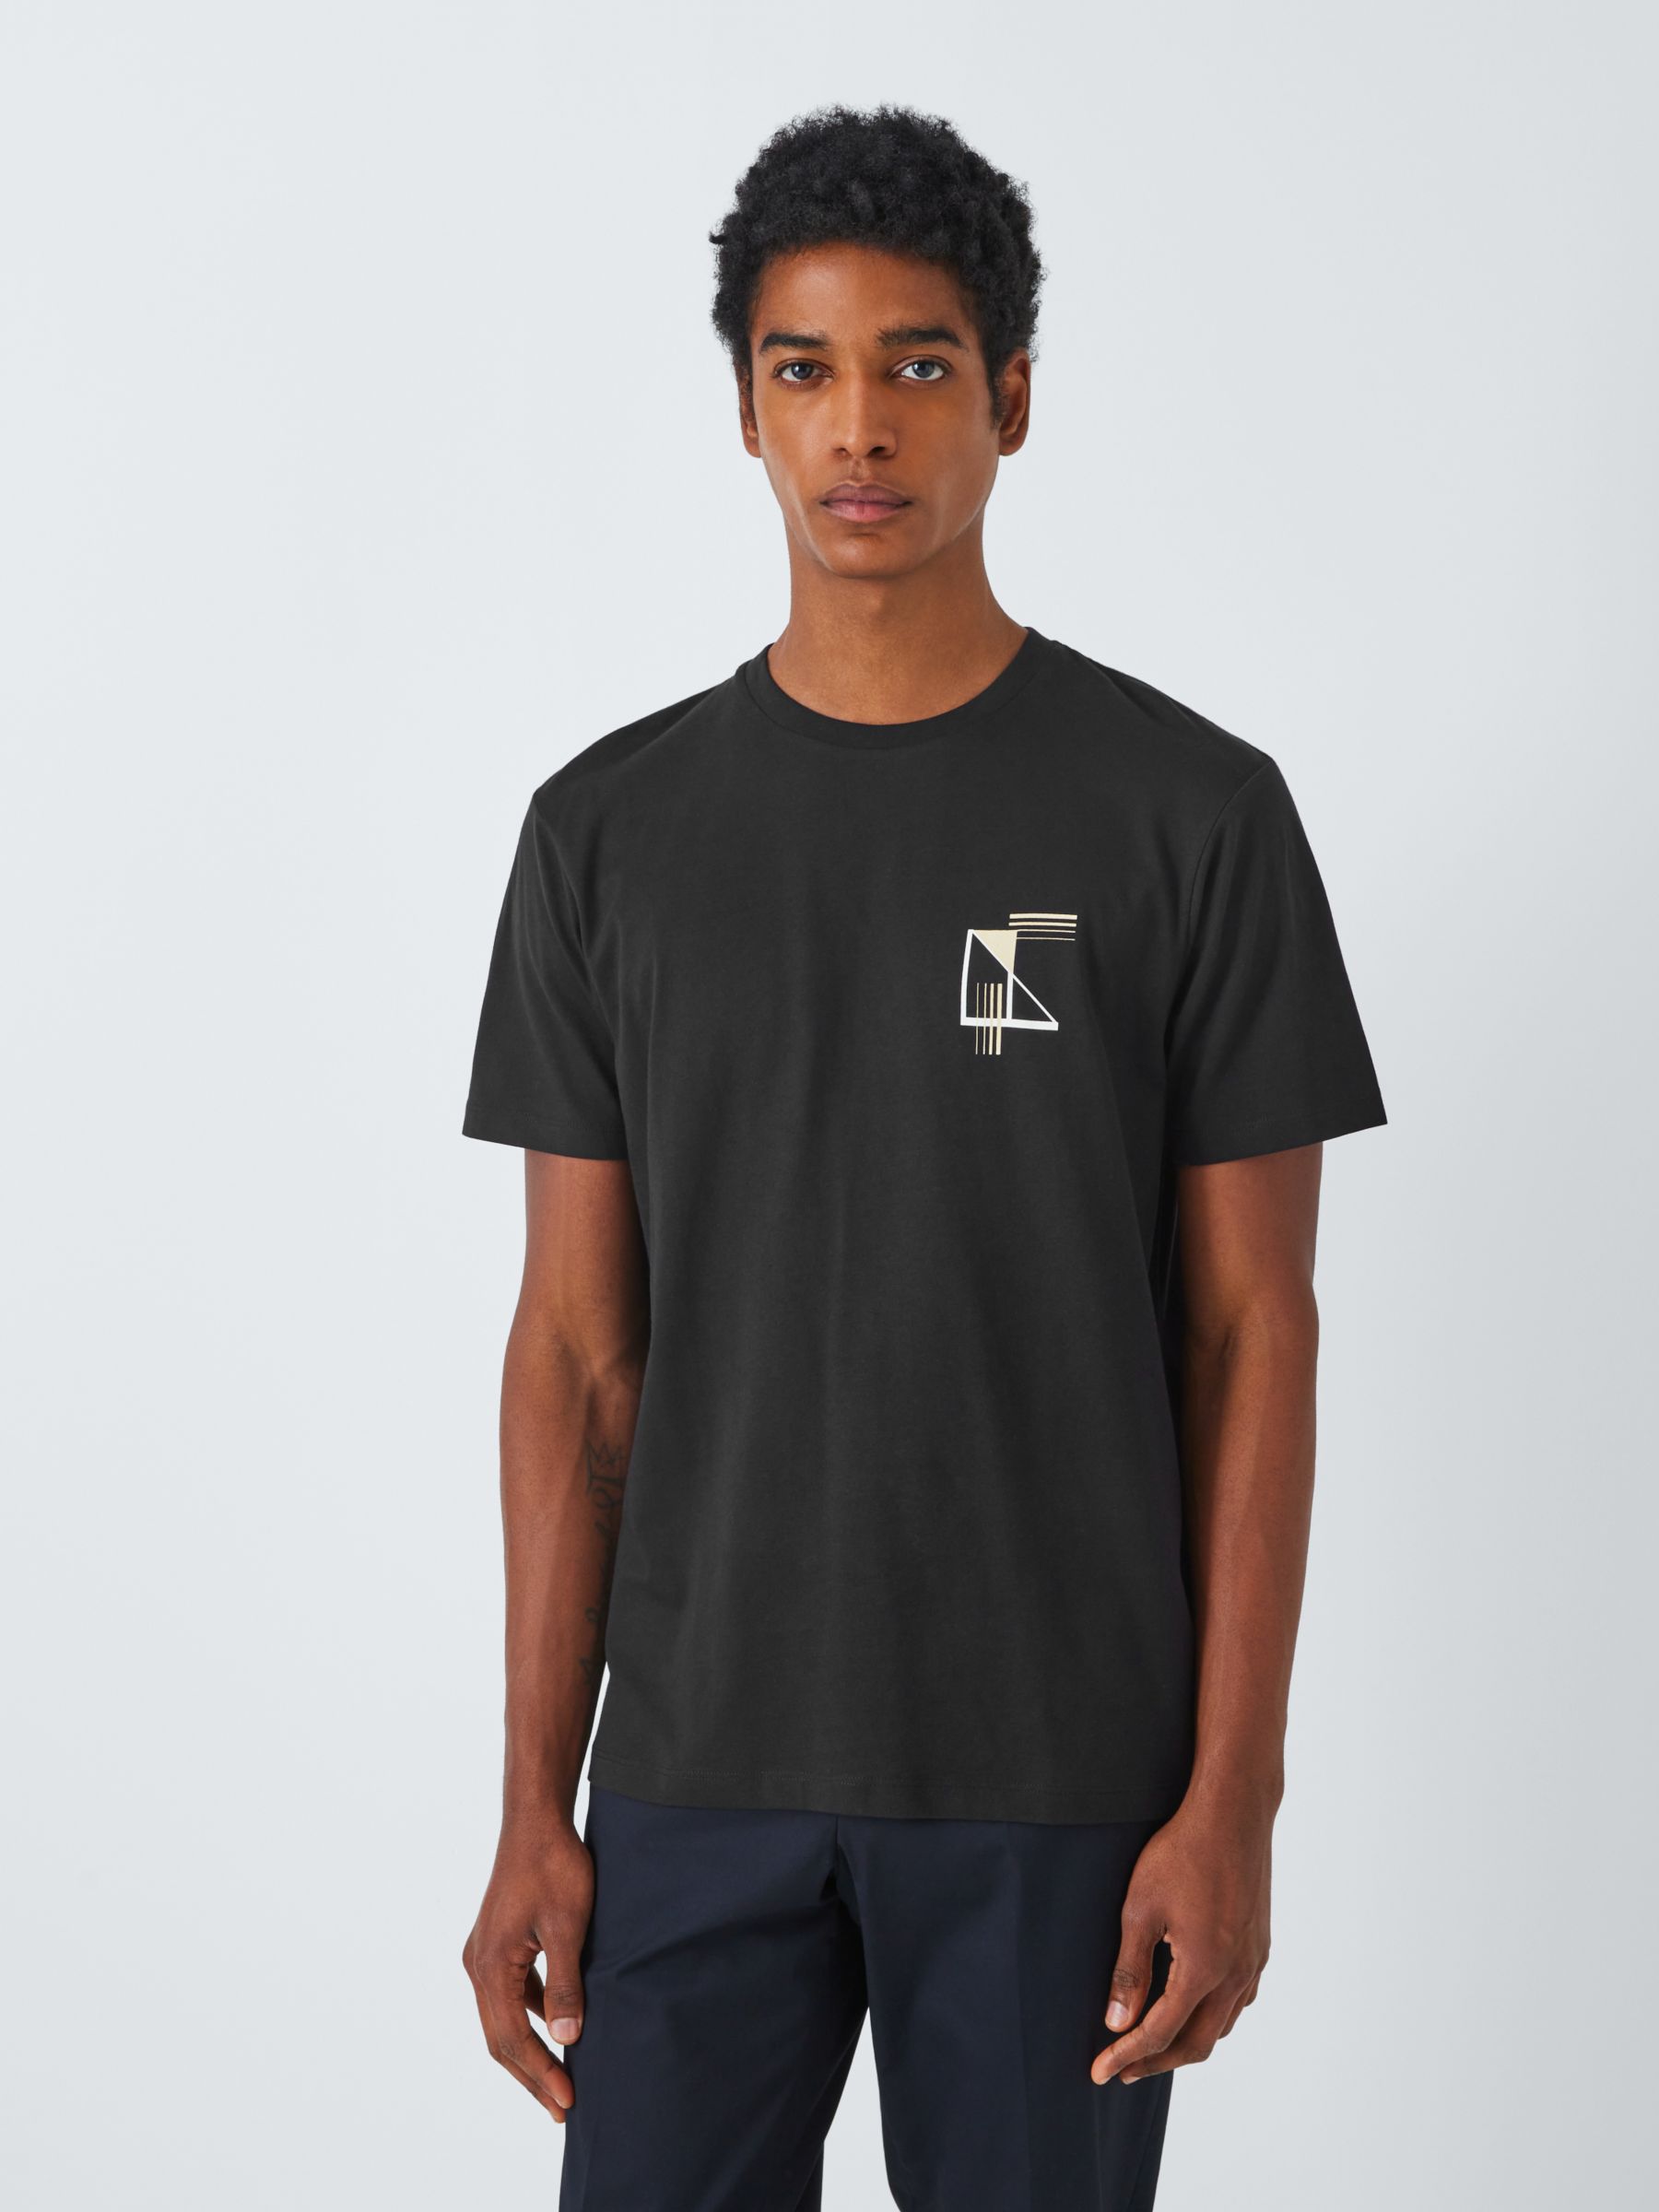 Kin Multi Logo Short Sleeve T-Shirt, Black, XL